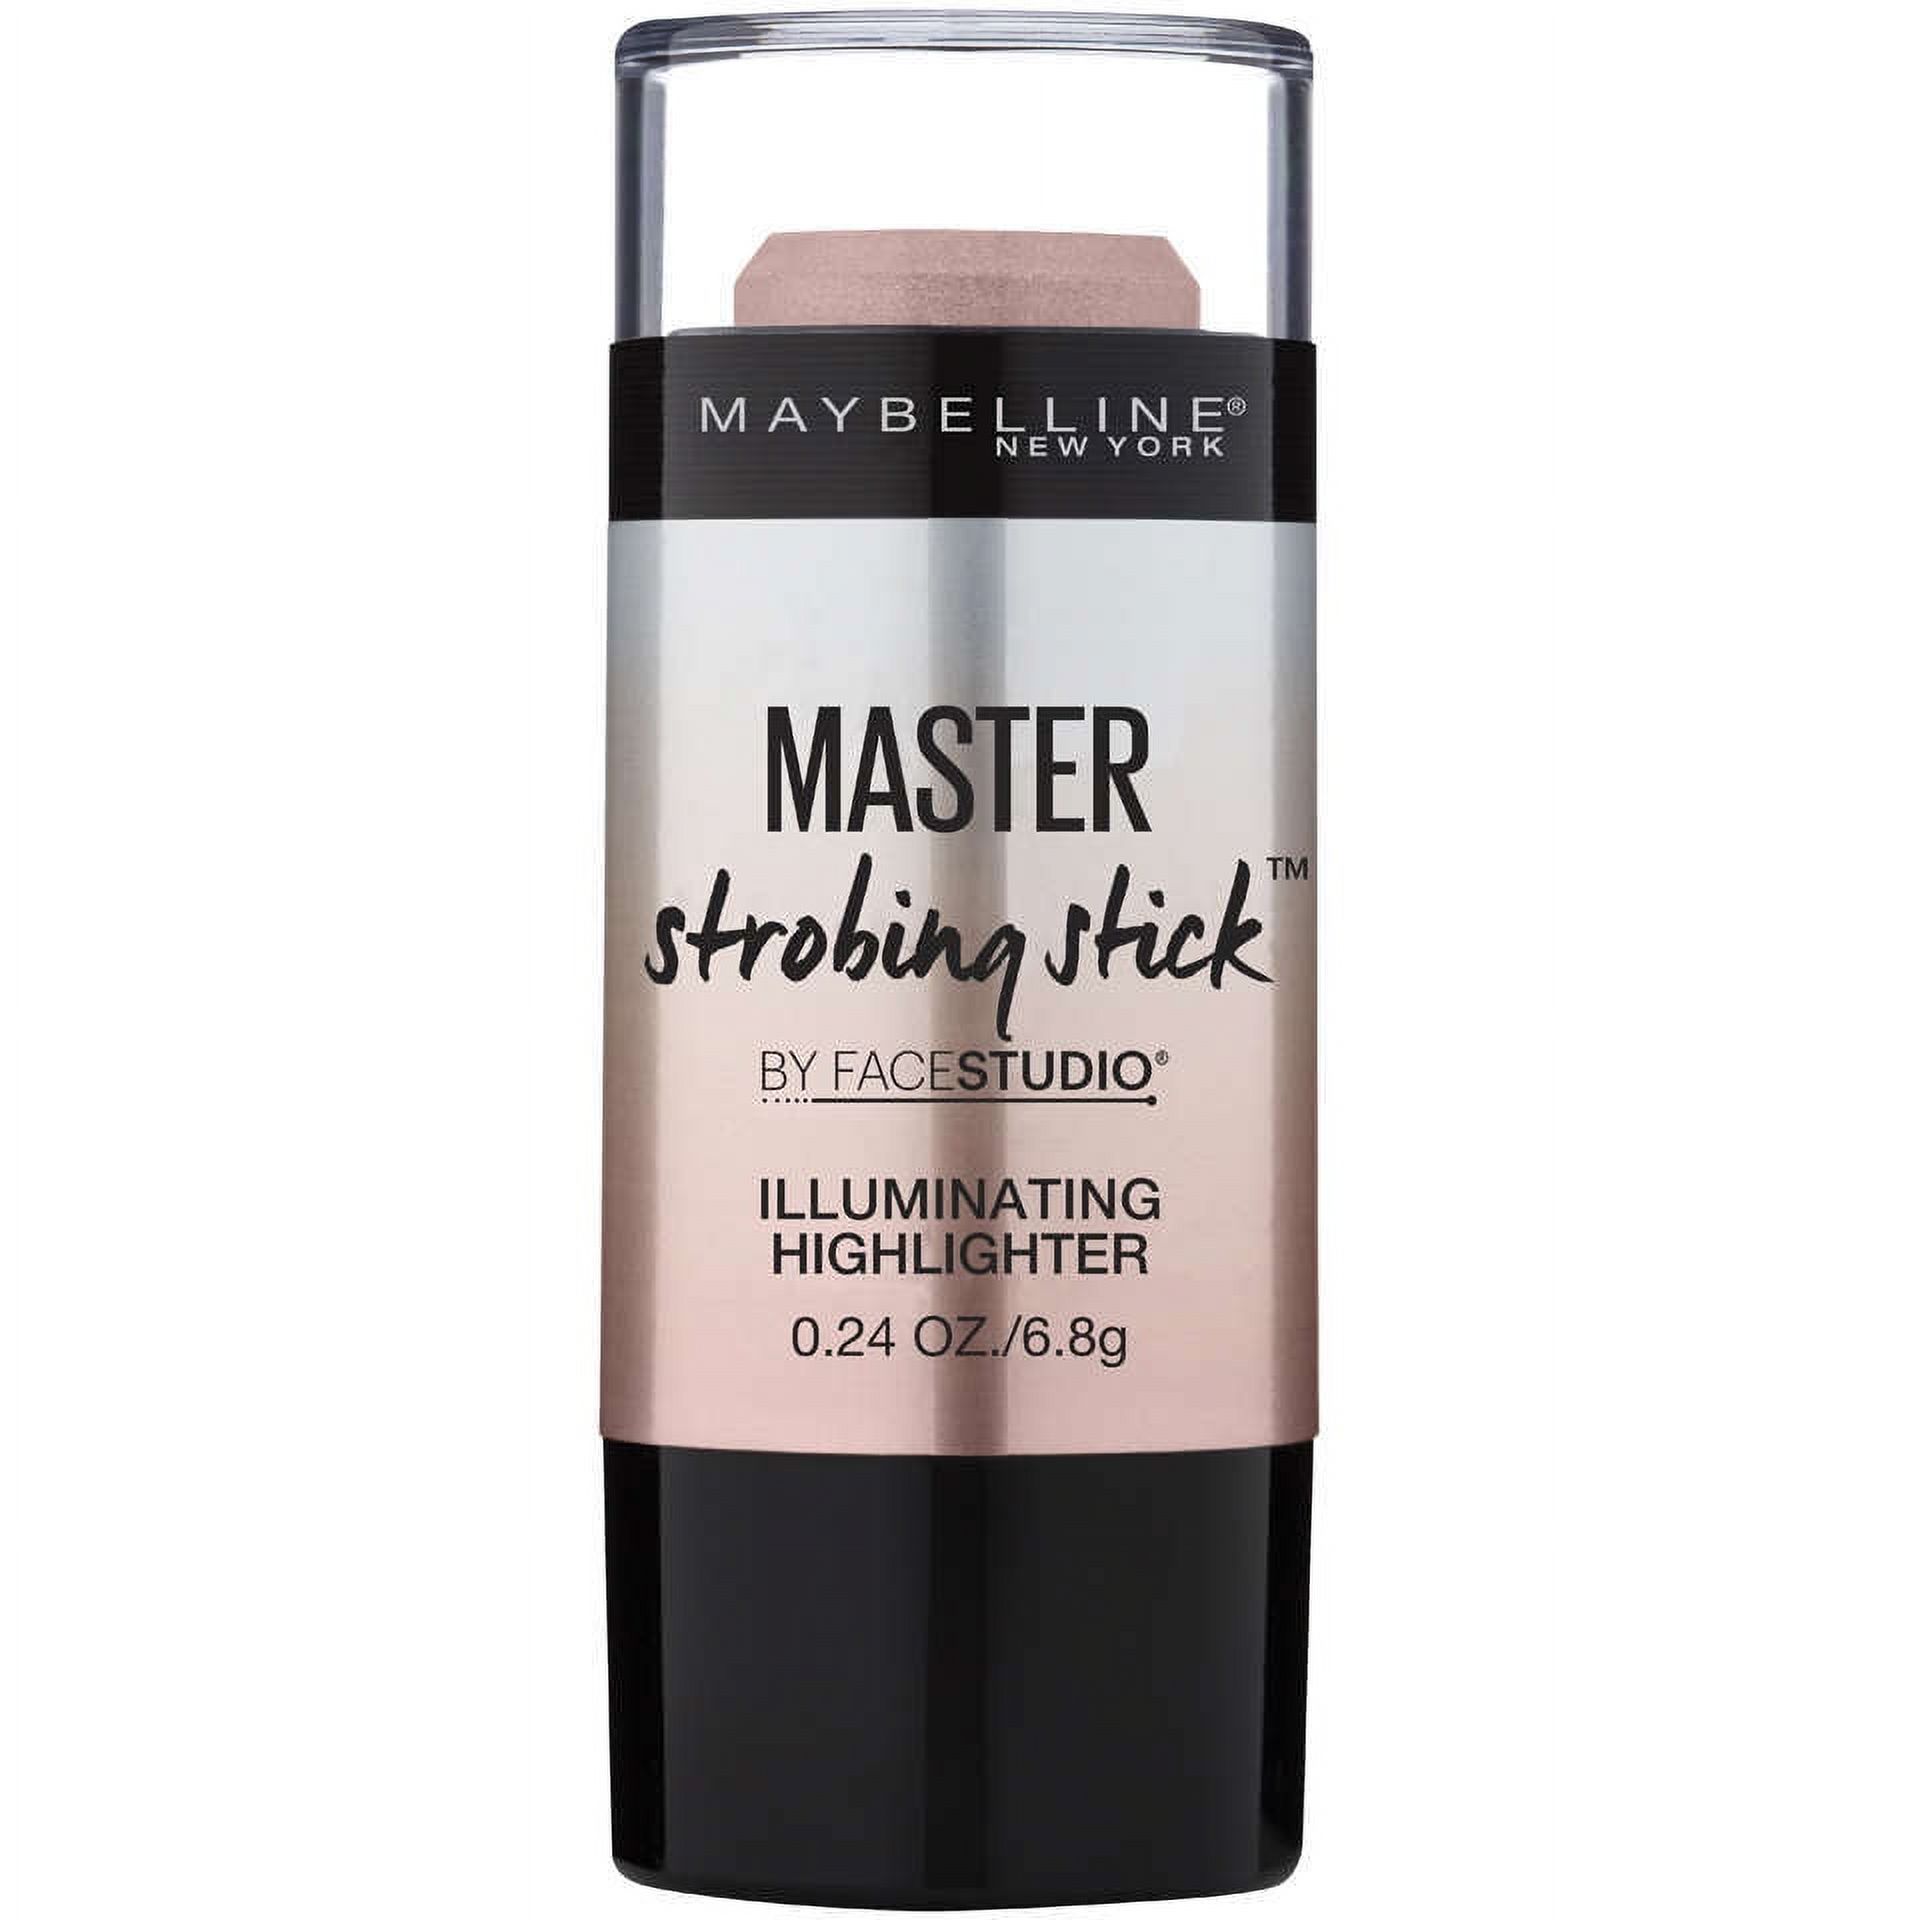 Maybelline Facestudio Master Strobing Makeup, Illuminating Highlighter, 0.24 oz - image 3 of 5